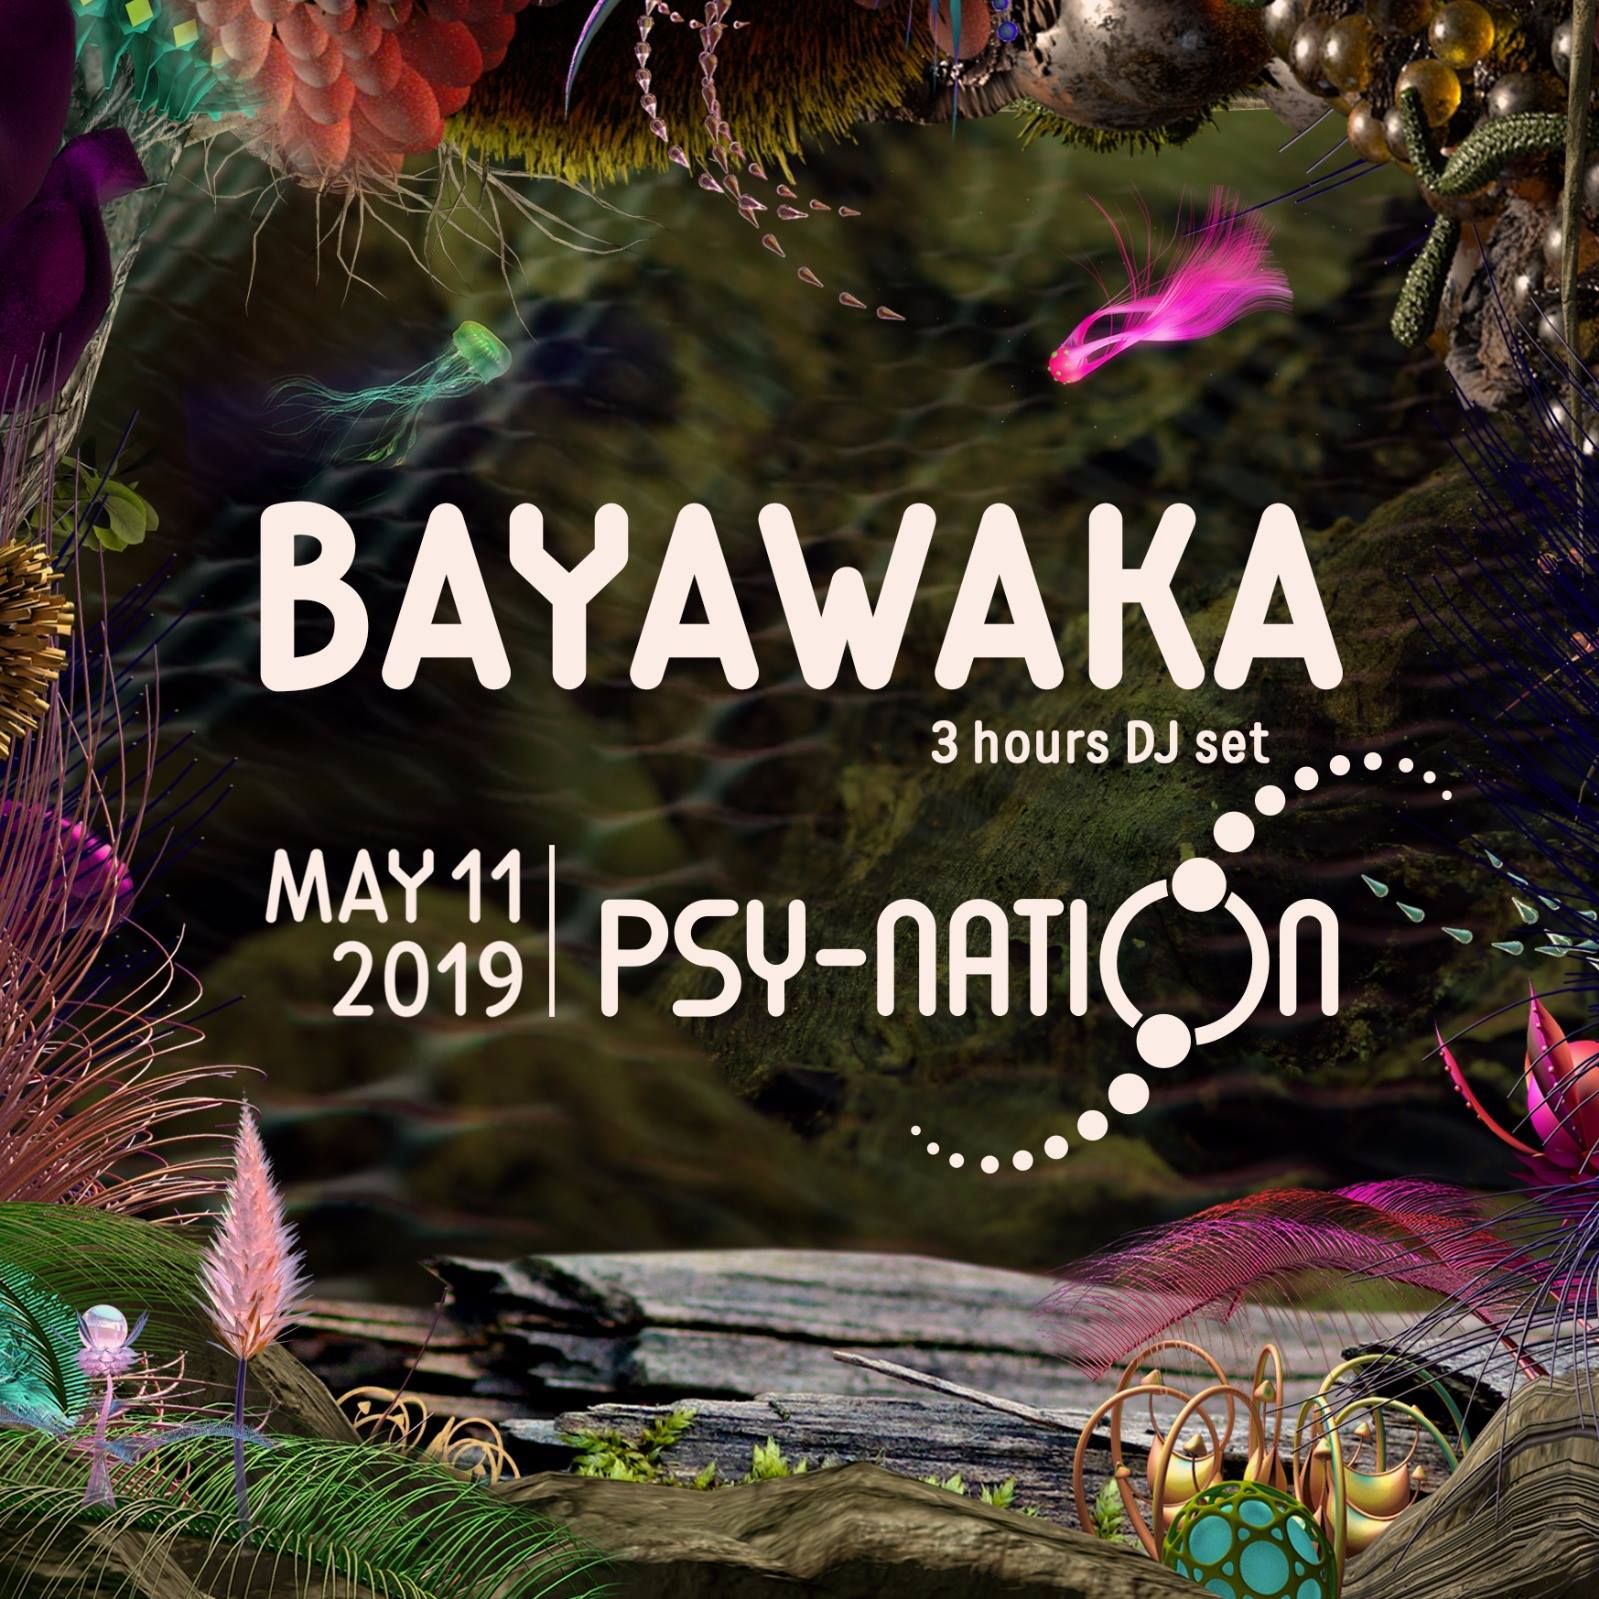 Preuzimanje datoteka DJ Bayawaka - Psy-Nation Denmark Warm Up Set